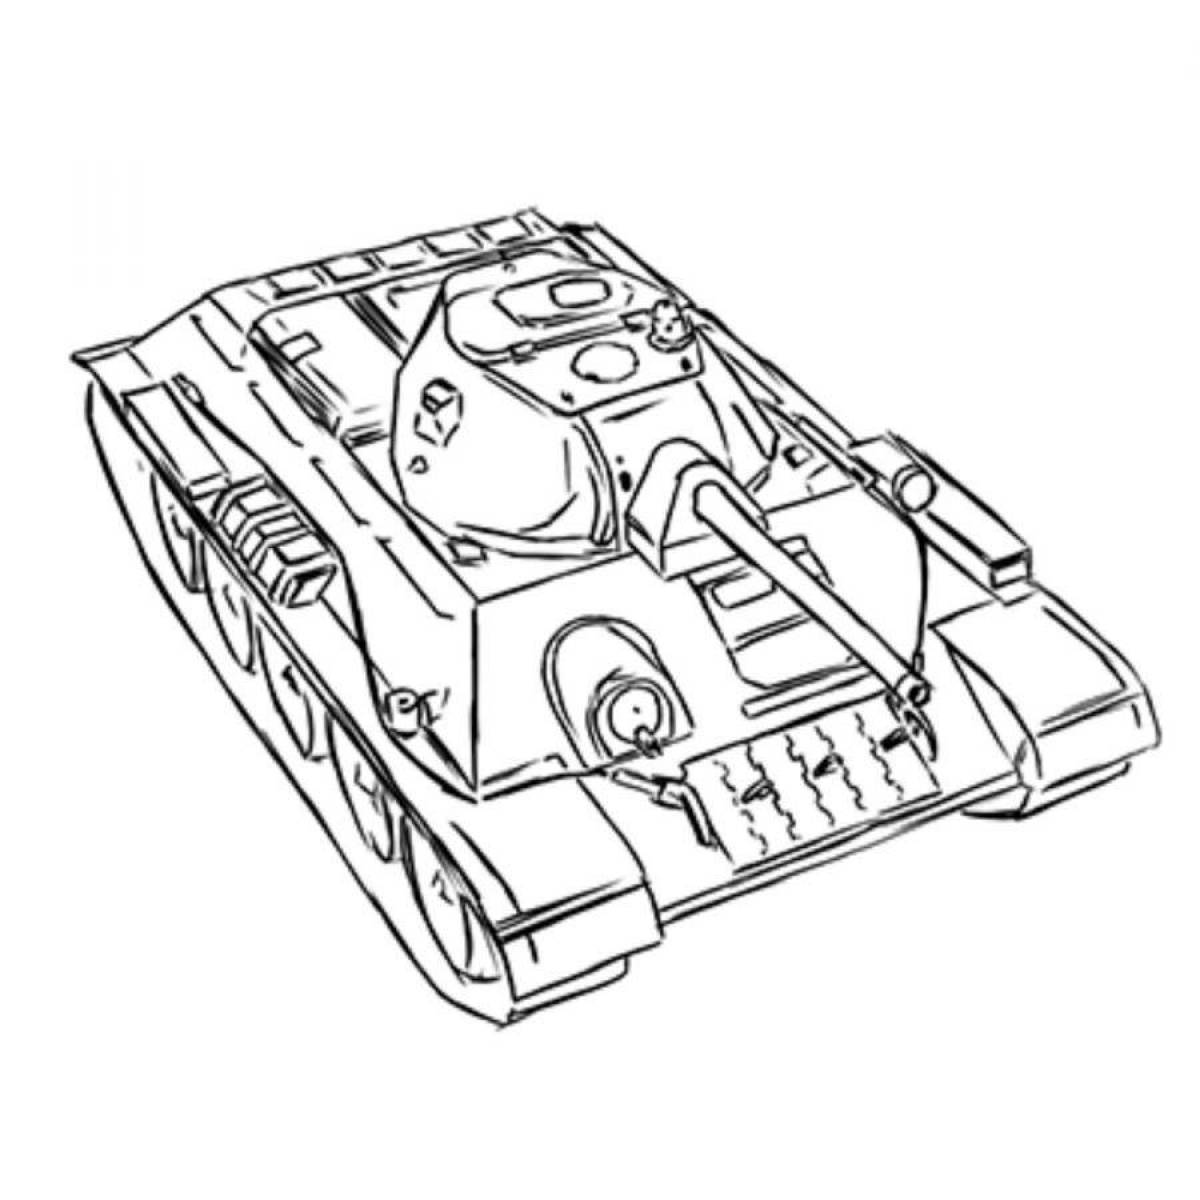 Coloring grand tank t 34